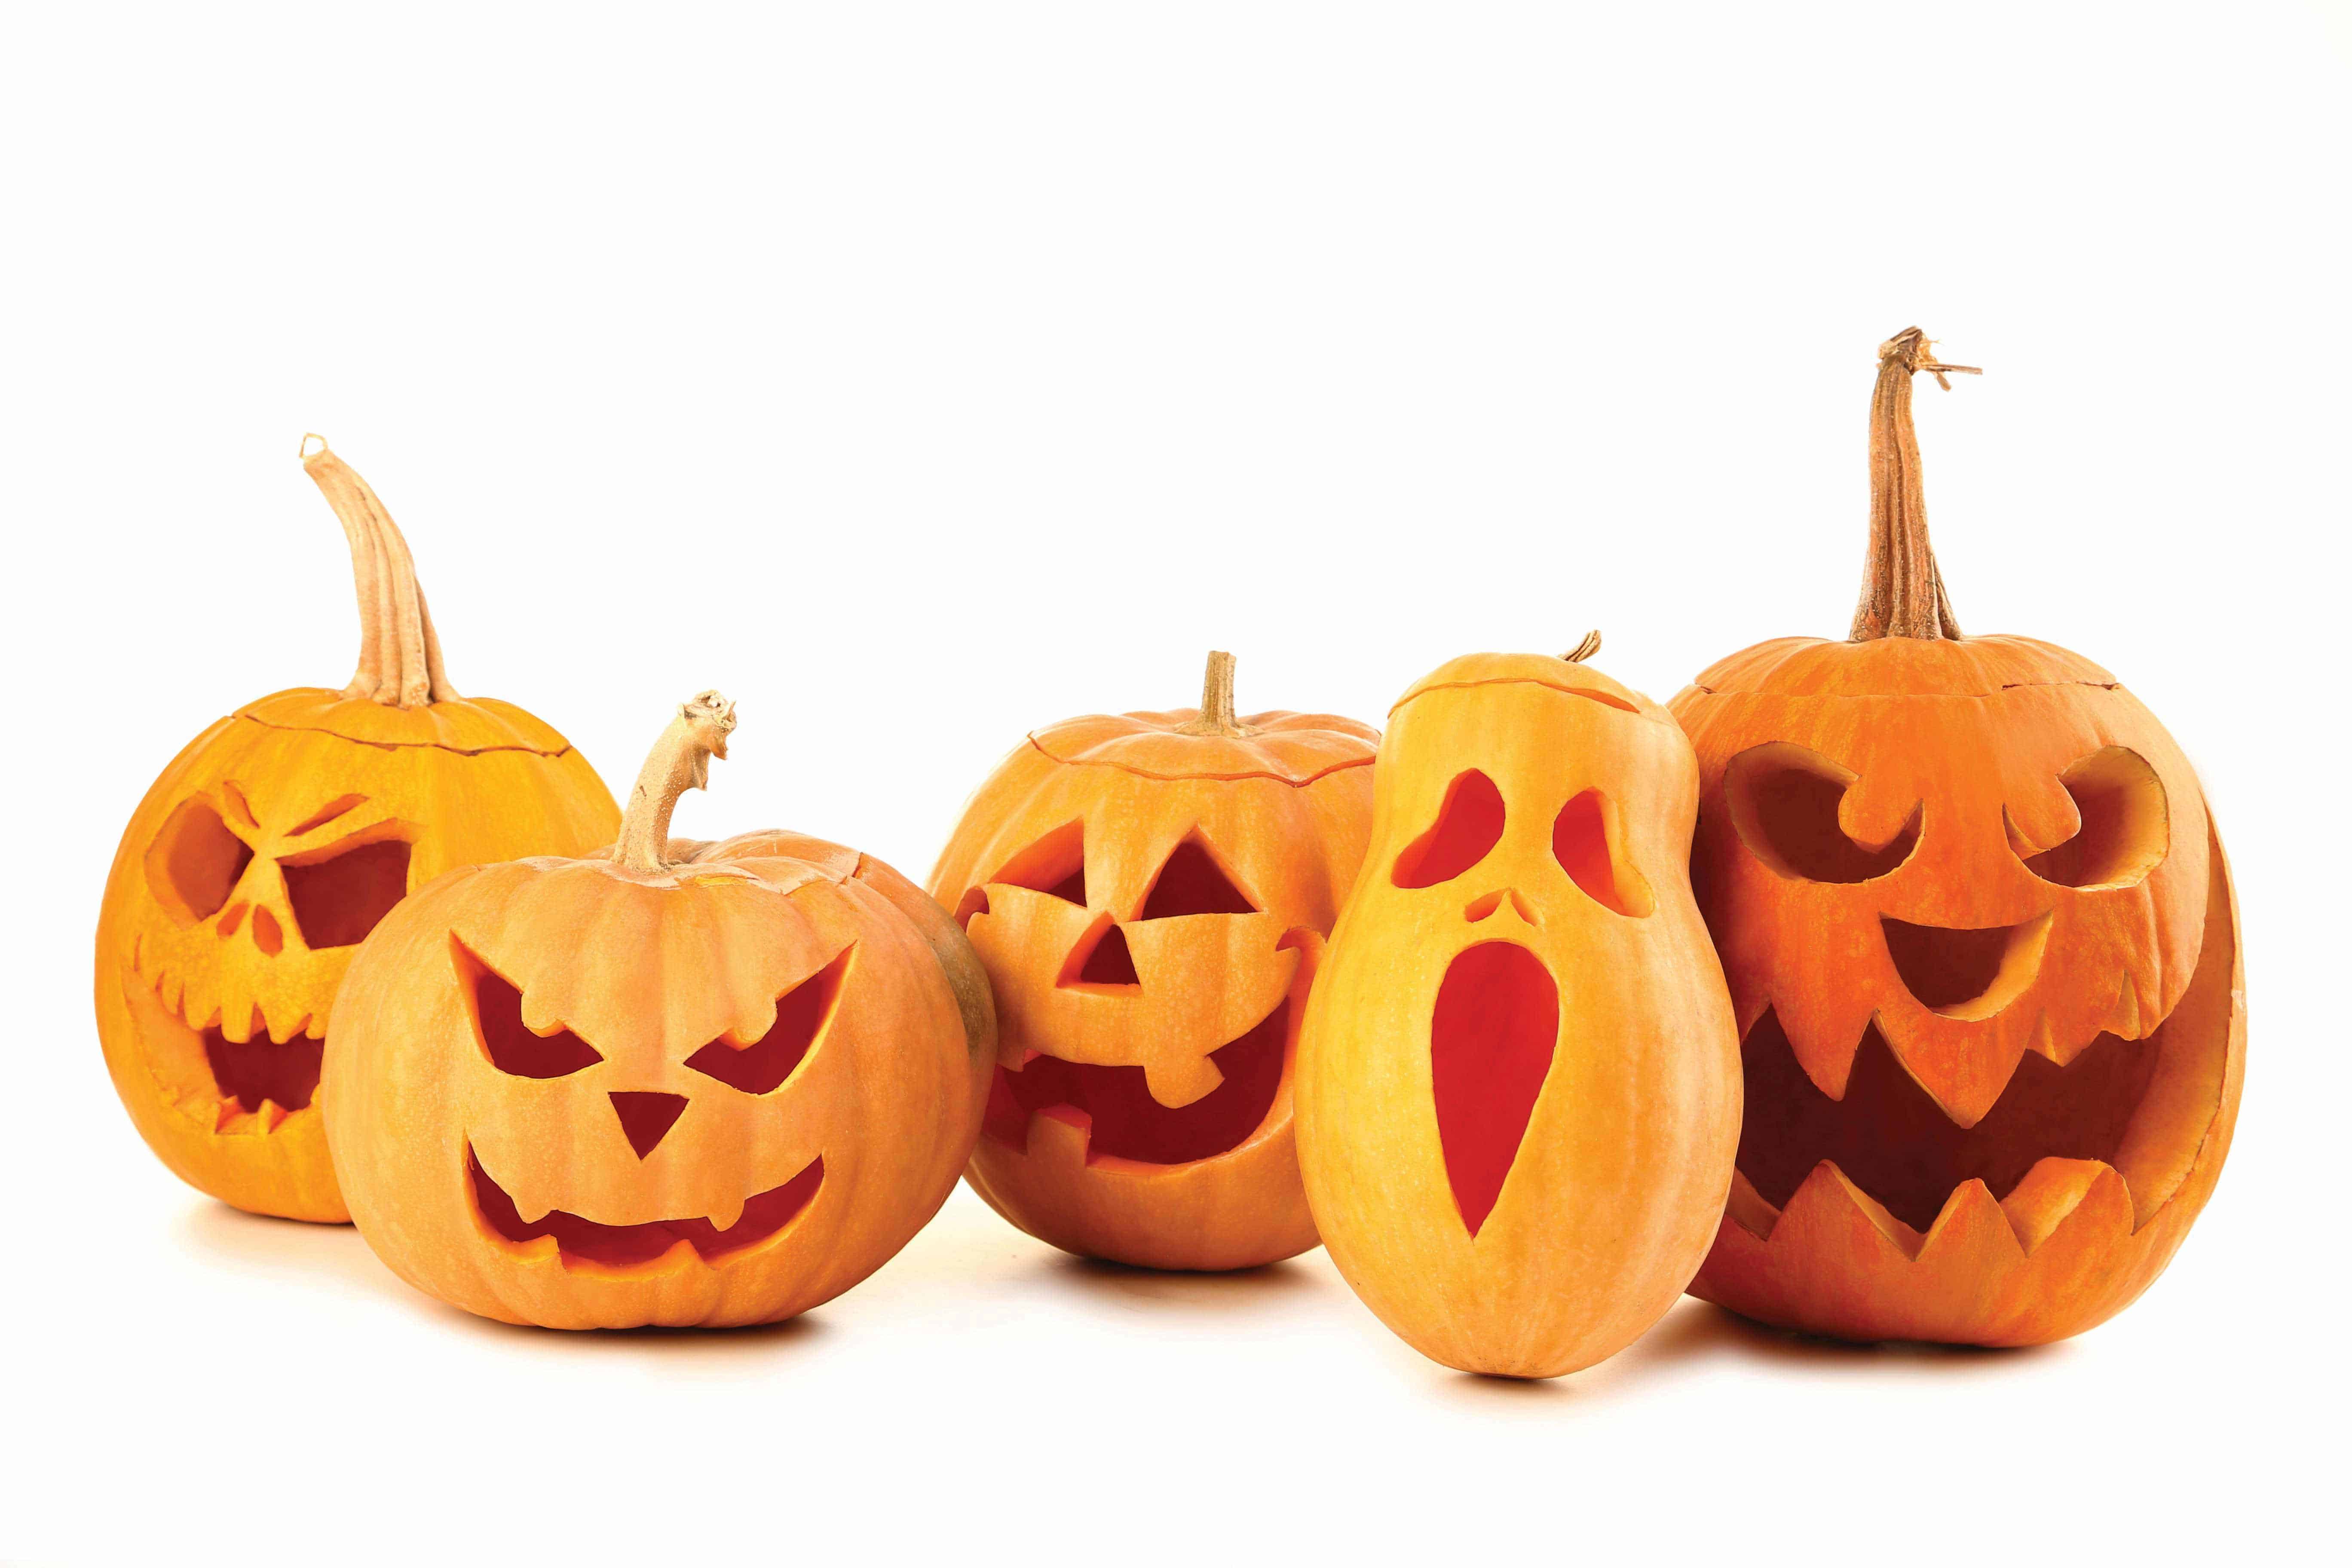 Pumpkin carving tips and tricks 15 Festive Pumpkin Decorating Ideas